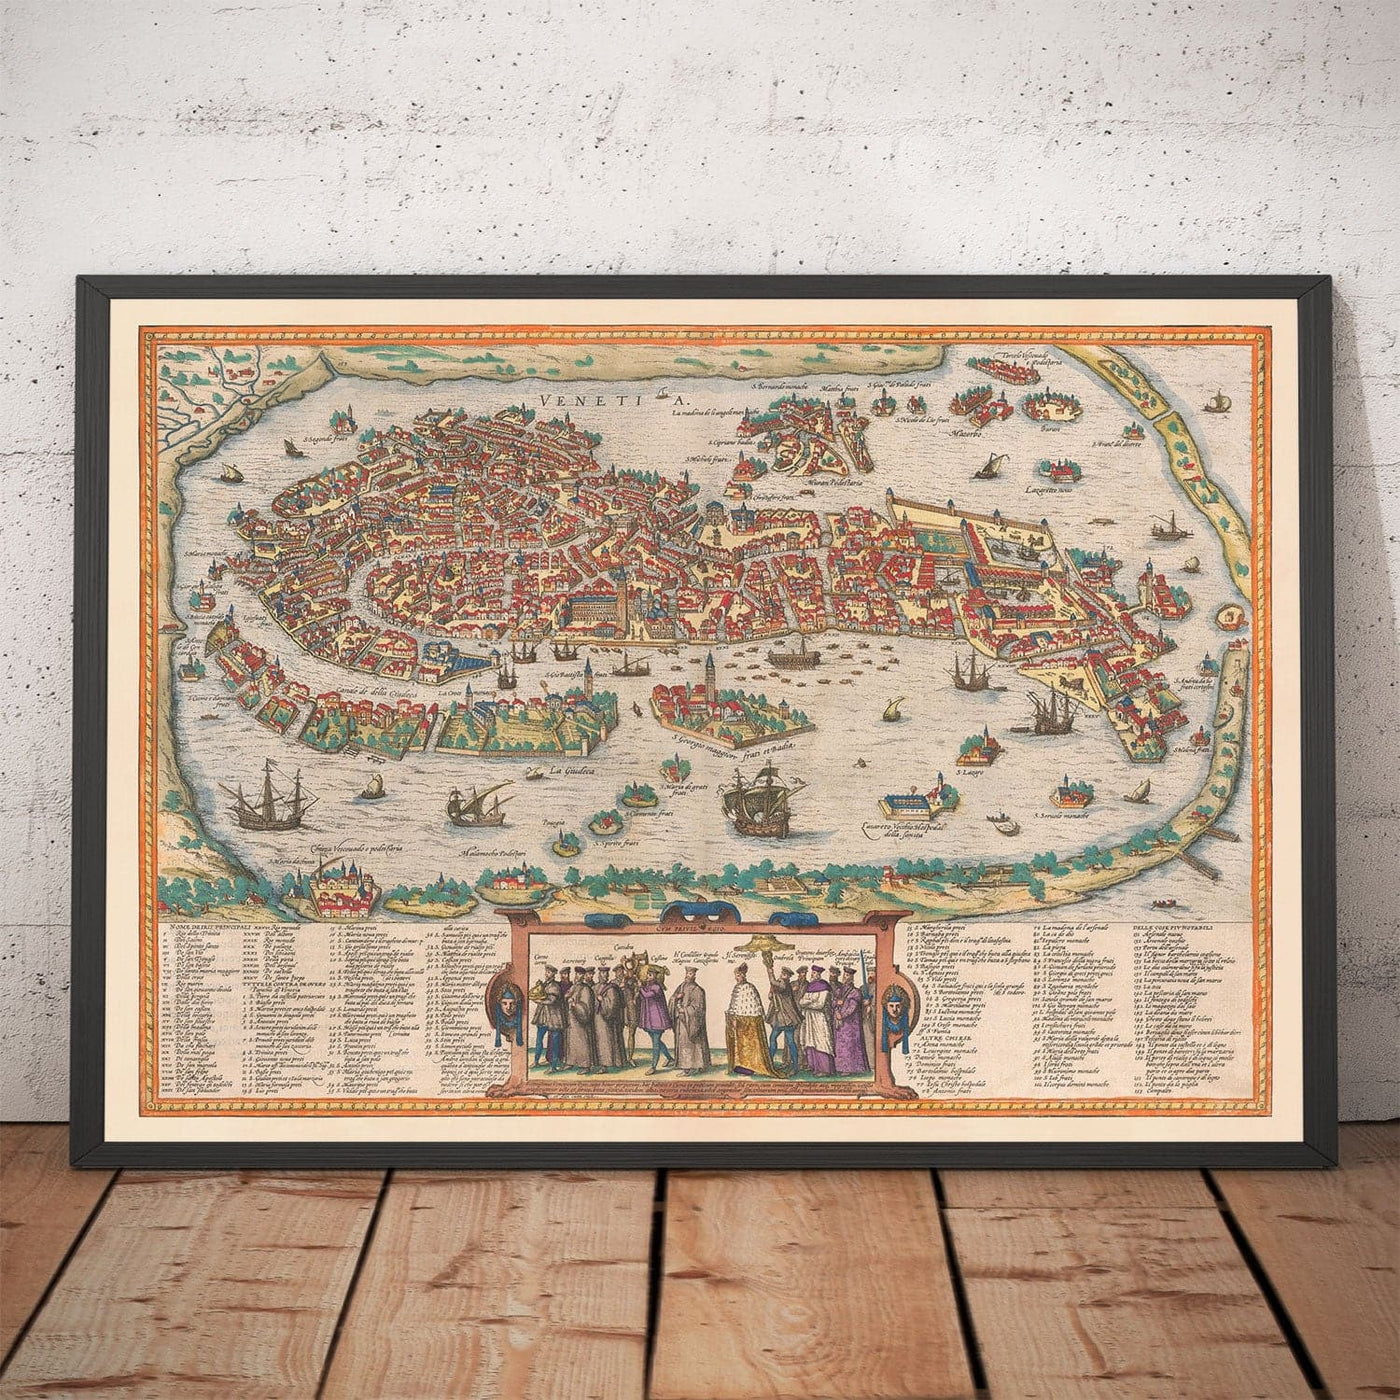 Mapa muy antiguo de Venecia, 1572 de Georg Braun - Venezia, Murano, Burano, Giudecca, Laguna veneciana